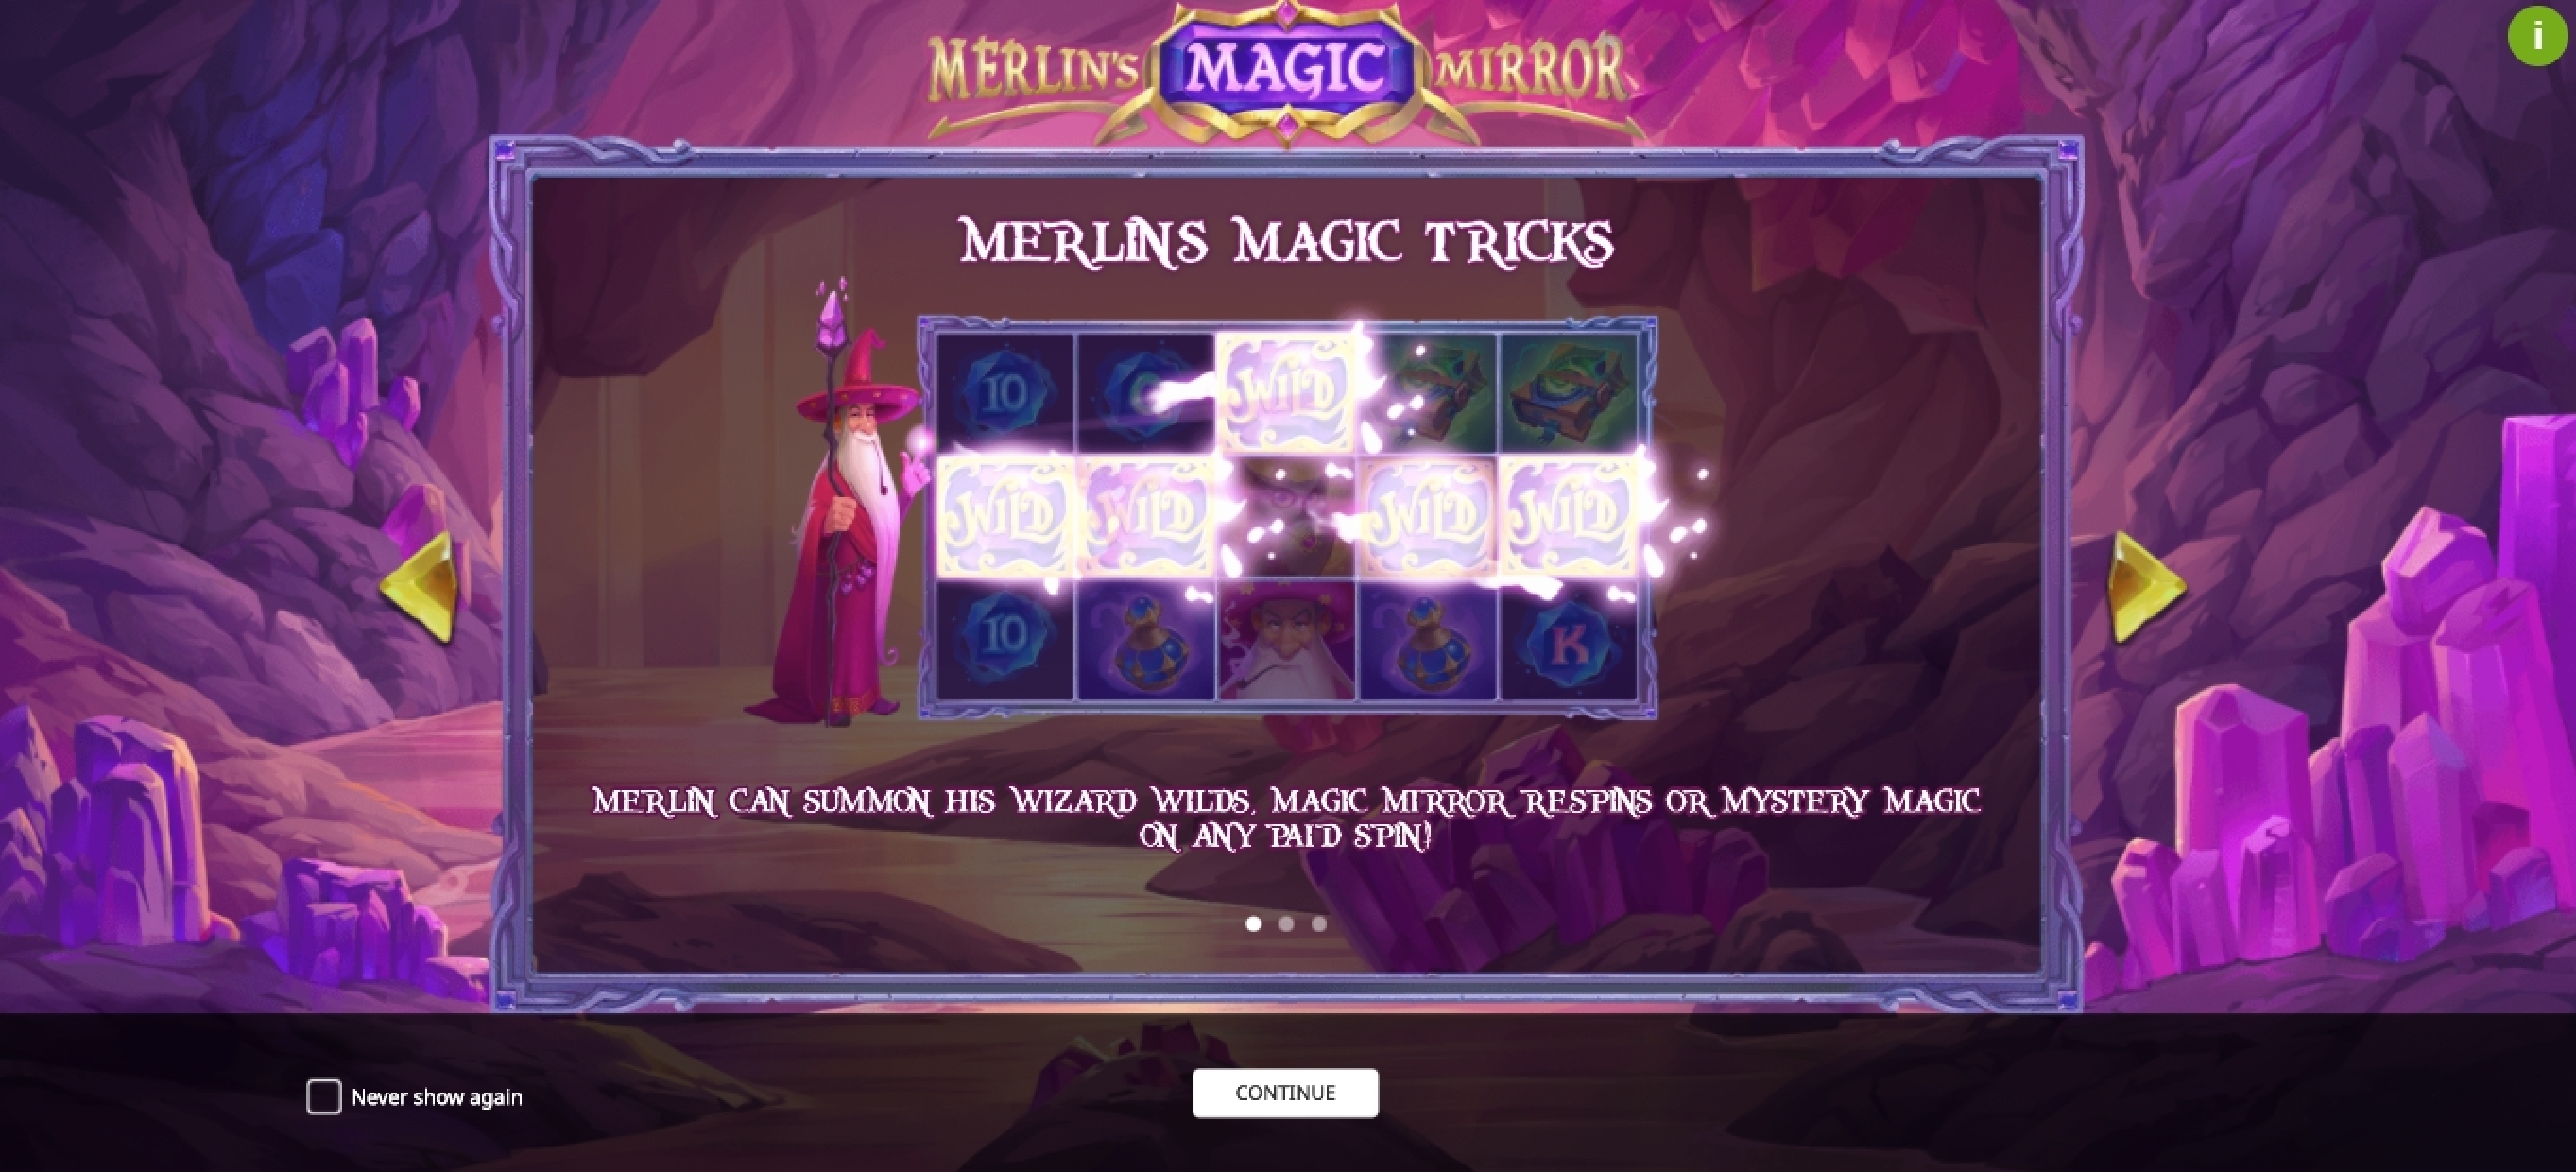 Play Merlin's Magic Mirror Free Casino Slot Game by iSoftBet